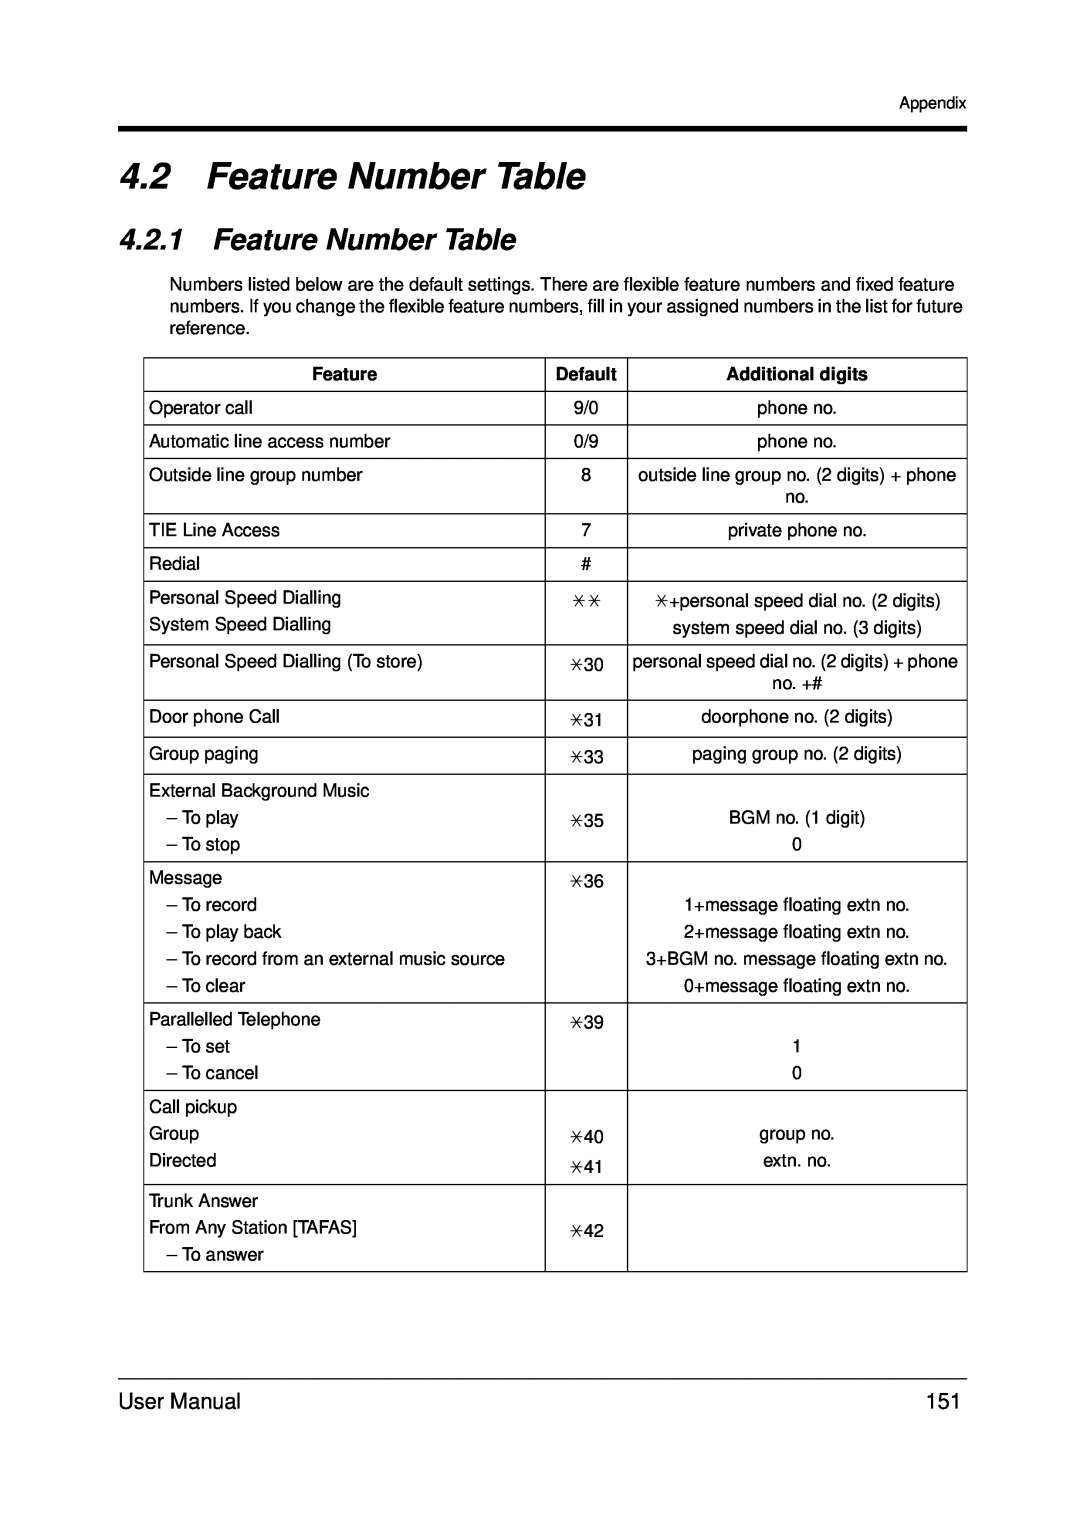 Panasonic KX-TDA200 user manual 4.2Feature Number Table, 4.2.1Feature Number Table, Default, Additional digits 